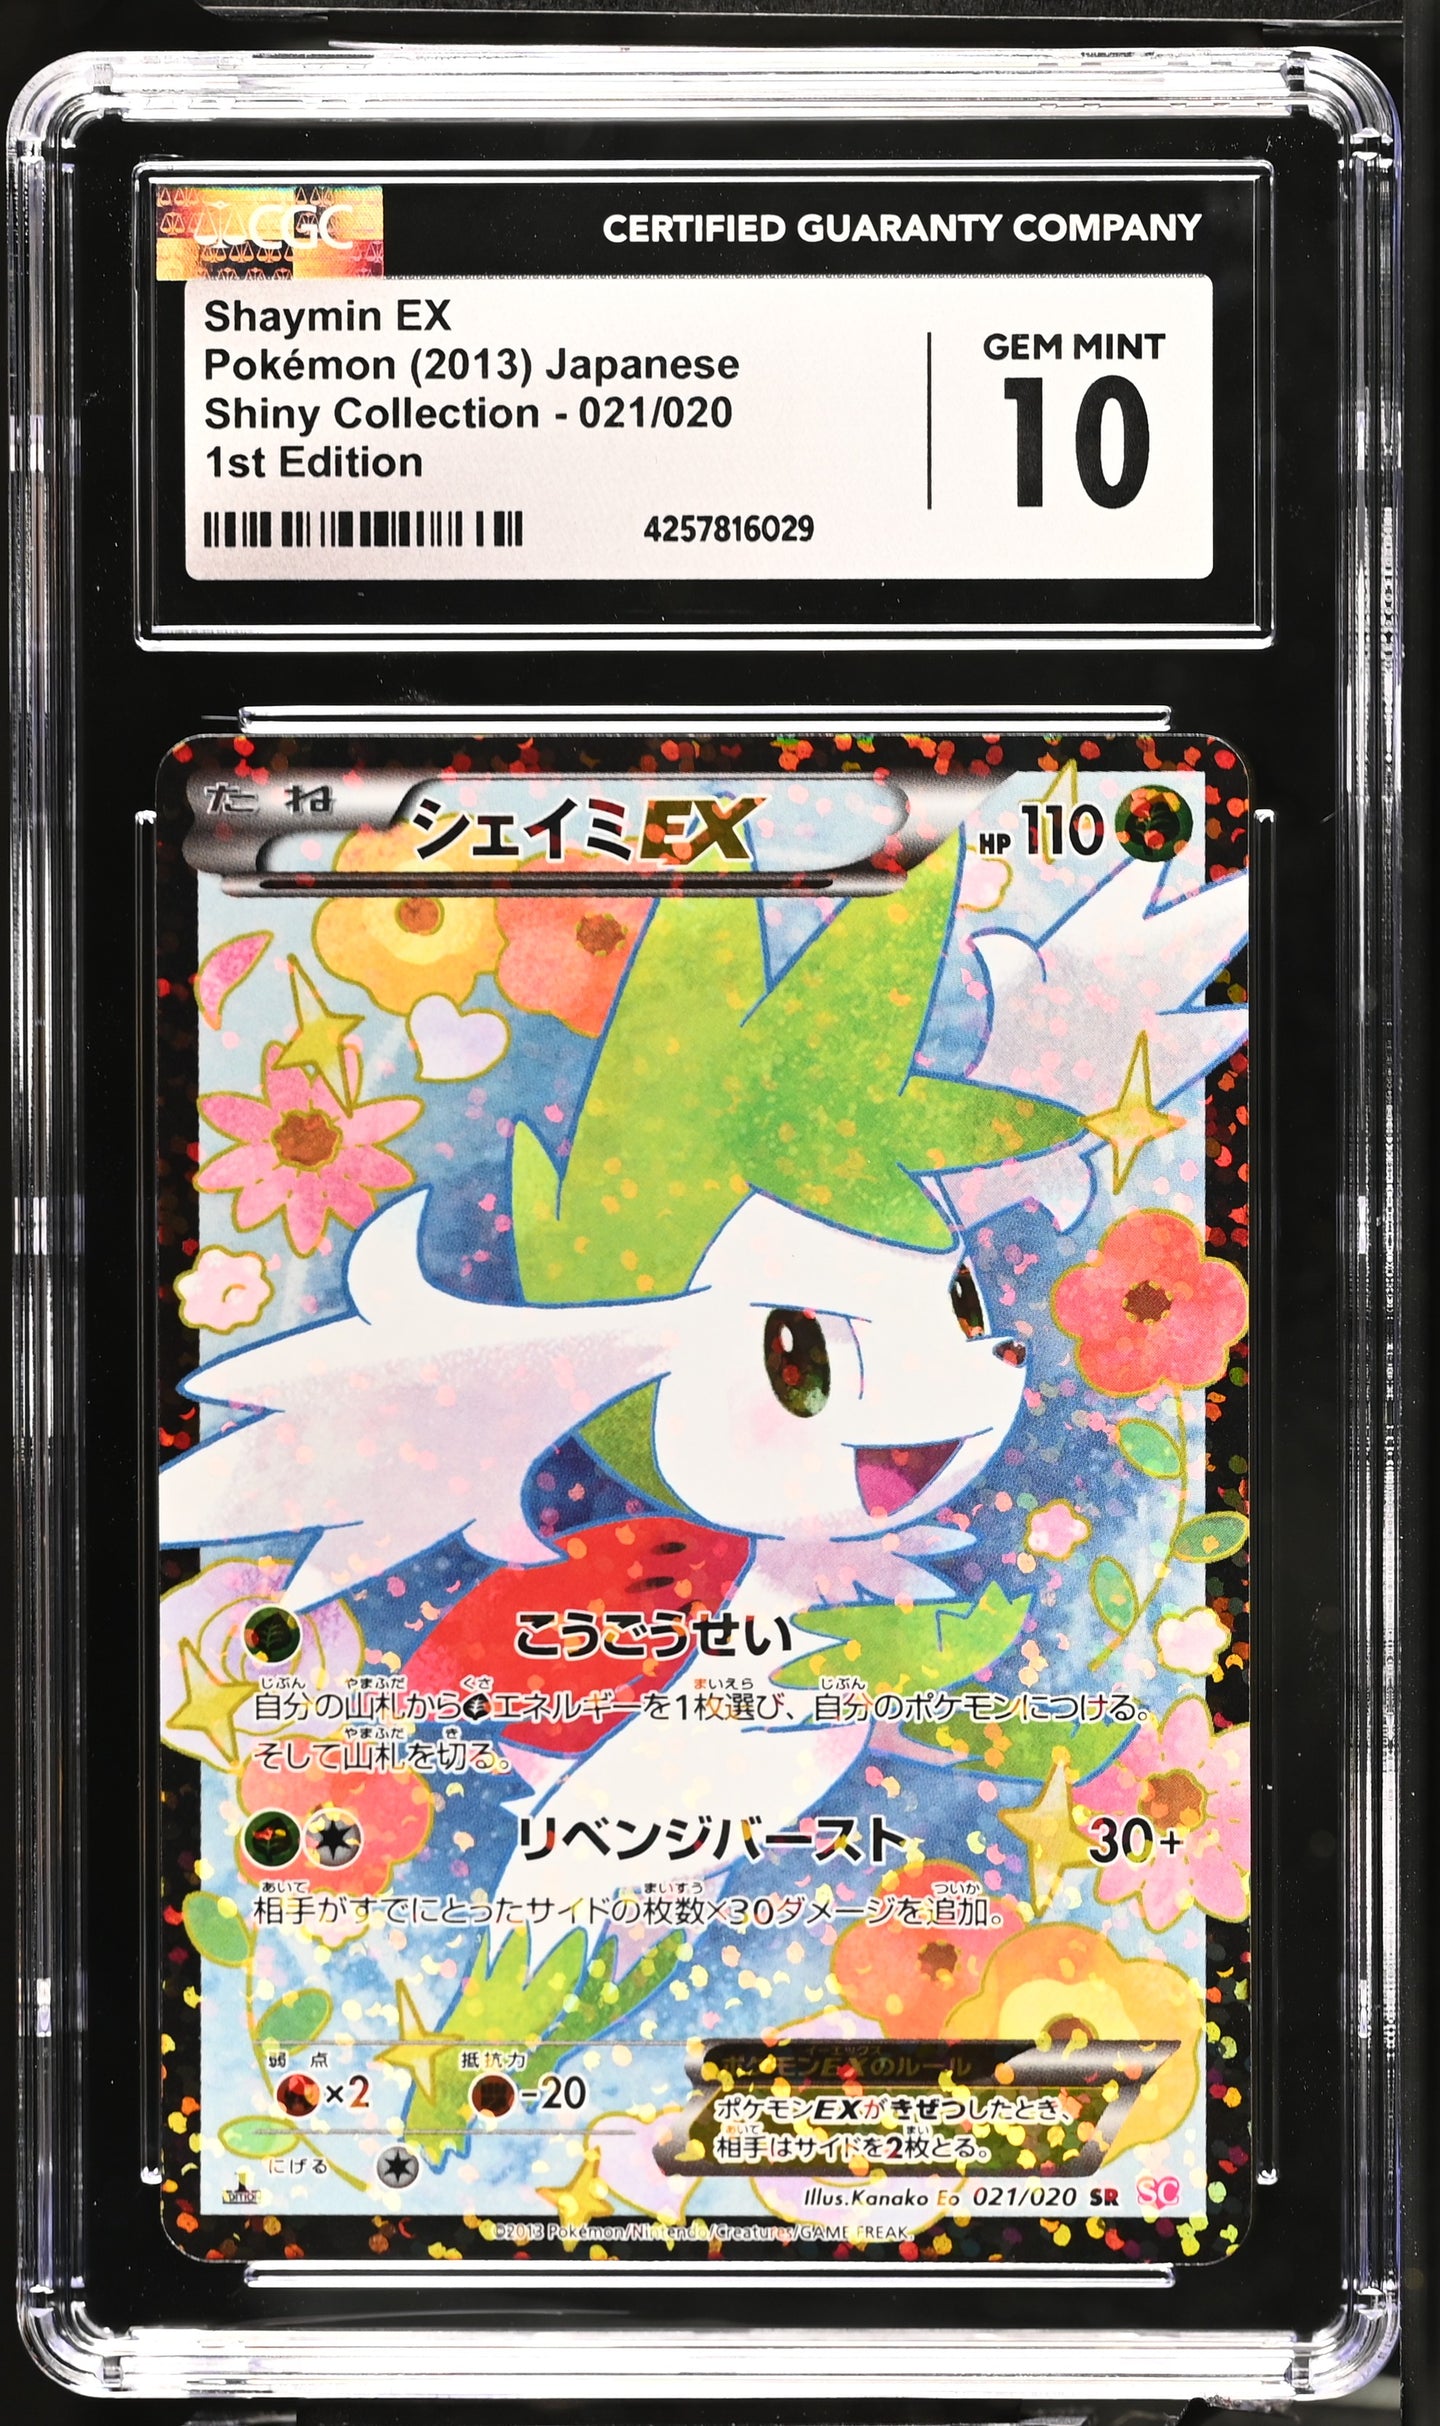 CGC GEM 10 Japanese Shaymin EX Full Art Radiant Holo 1st Edition (Graded Card)